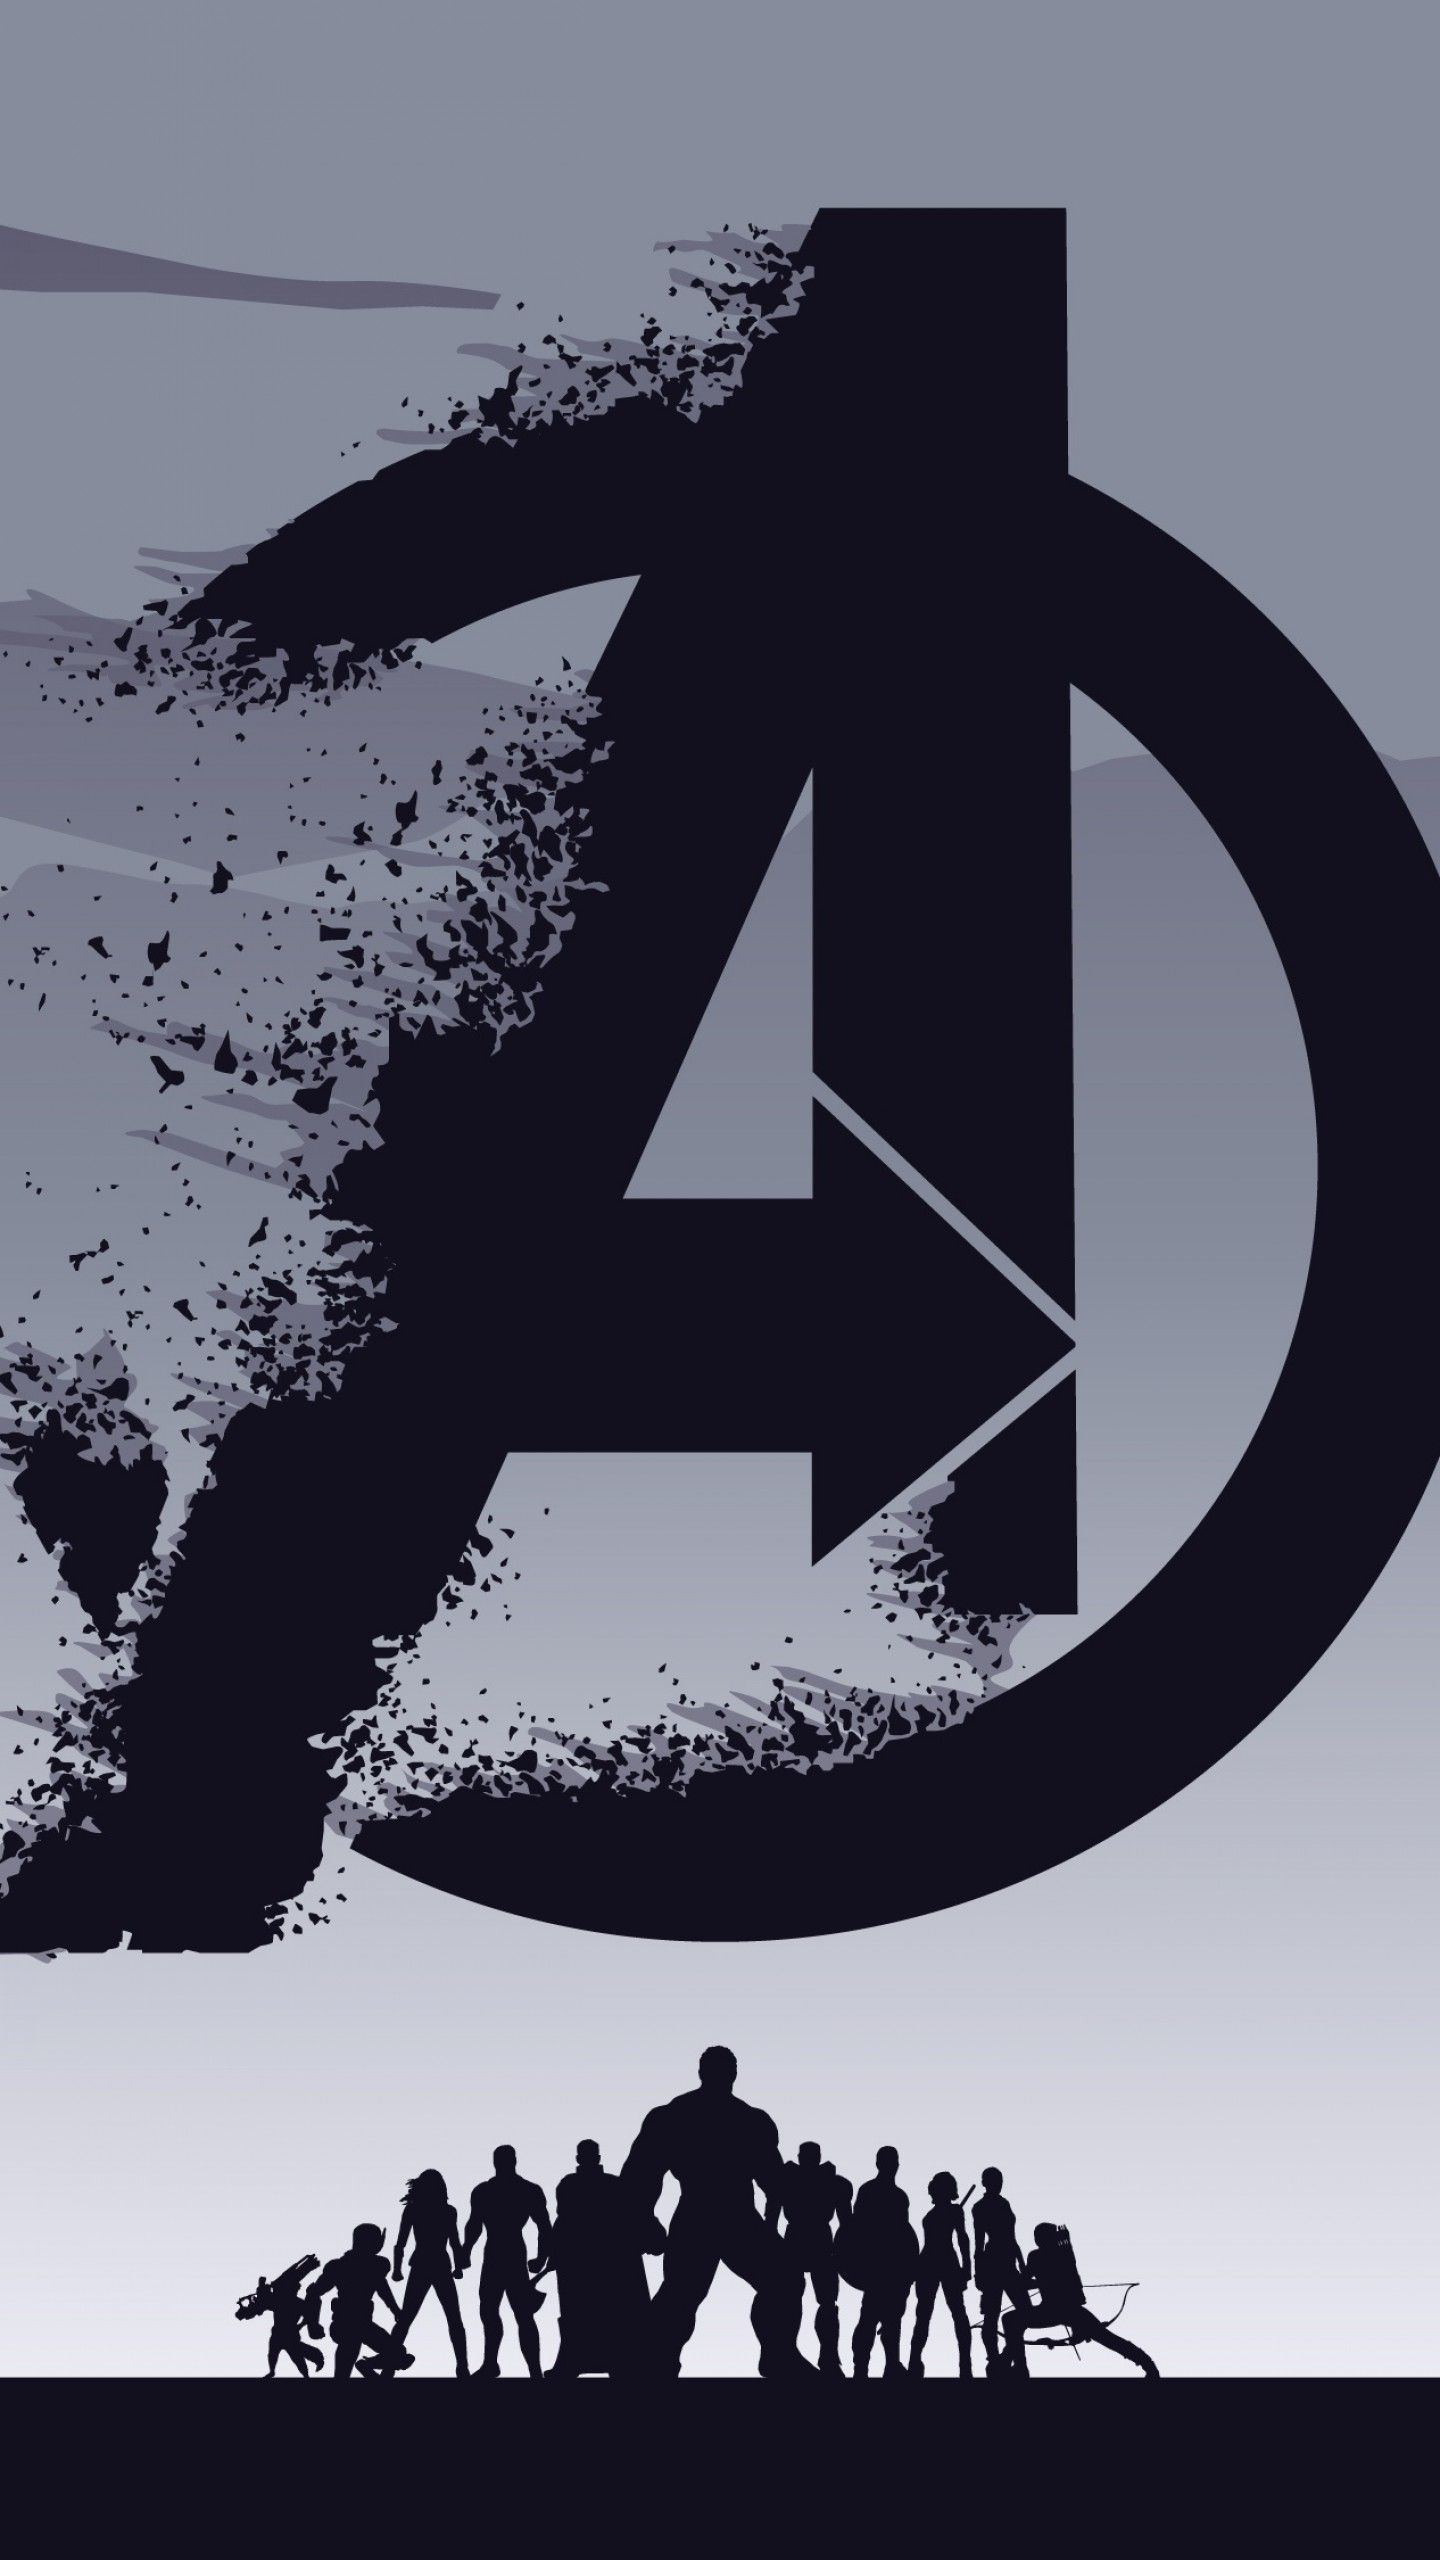 Wallpaper Avengers: Endgame, Minimal art, 4K, Movies,. Wallpaper for iPhone, Android, Mobile and Desktop